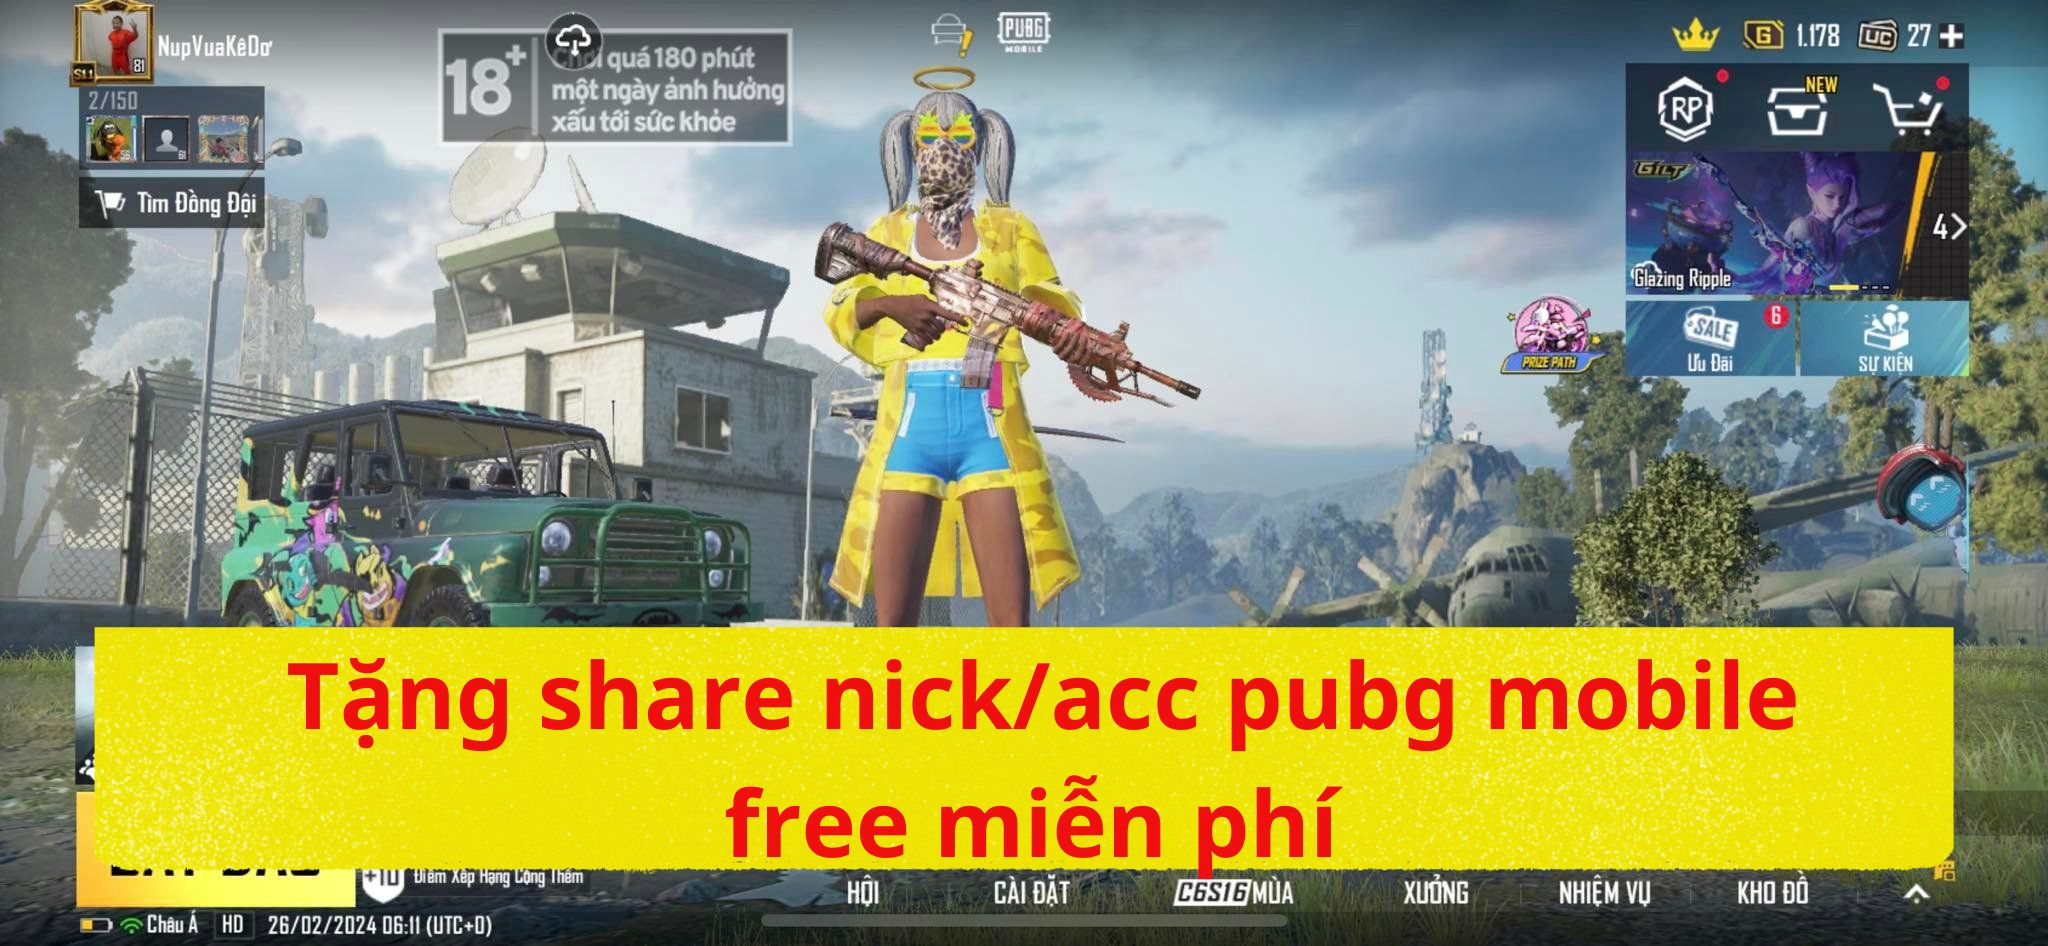 Tặng share nick/acc pubg mobile free miễn phí 